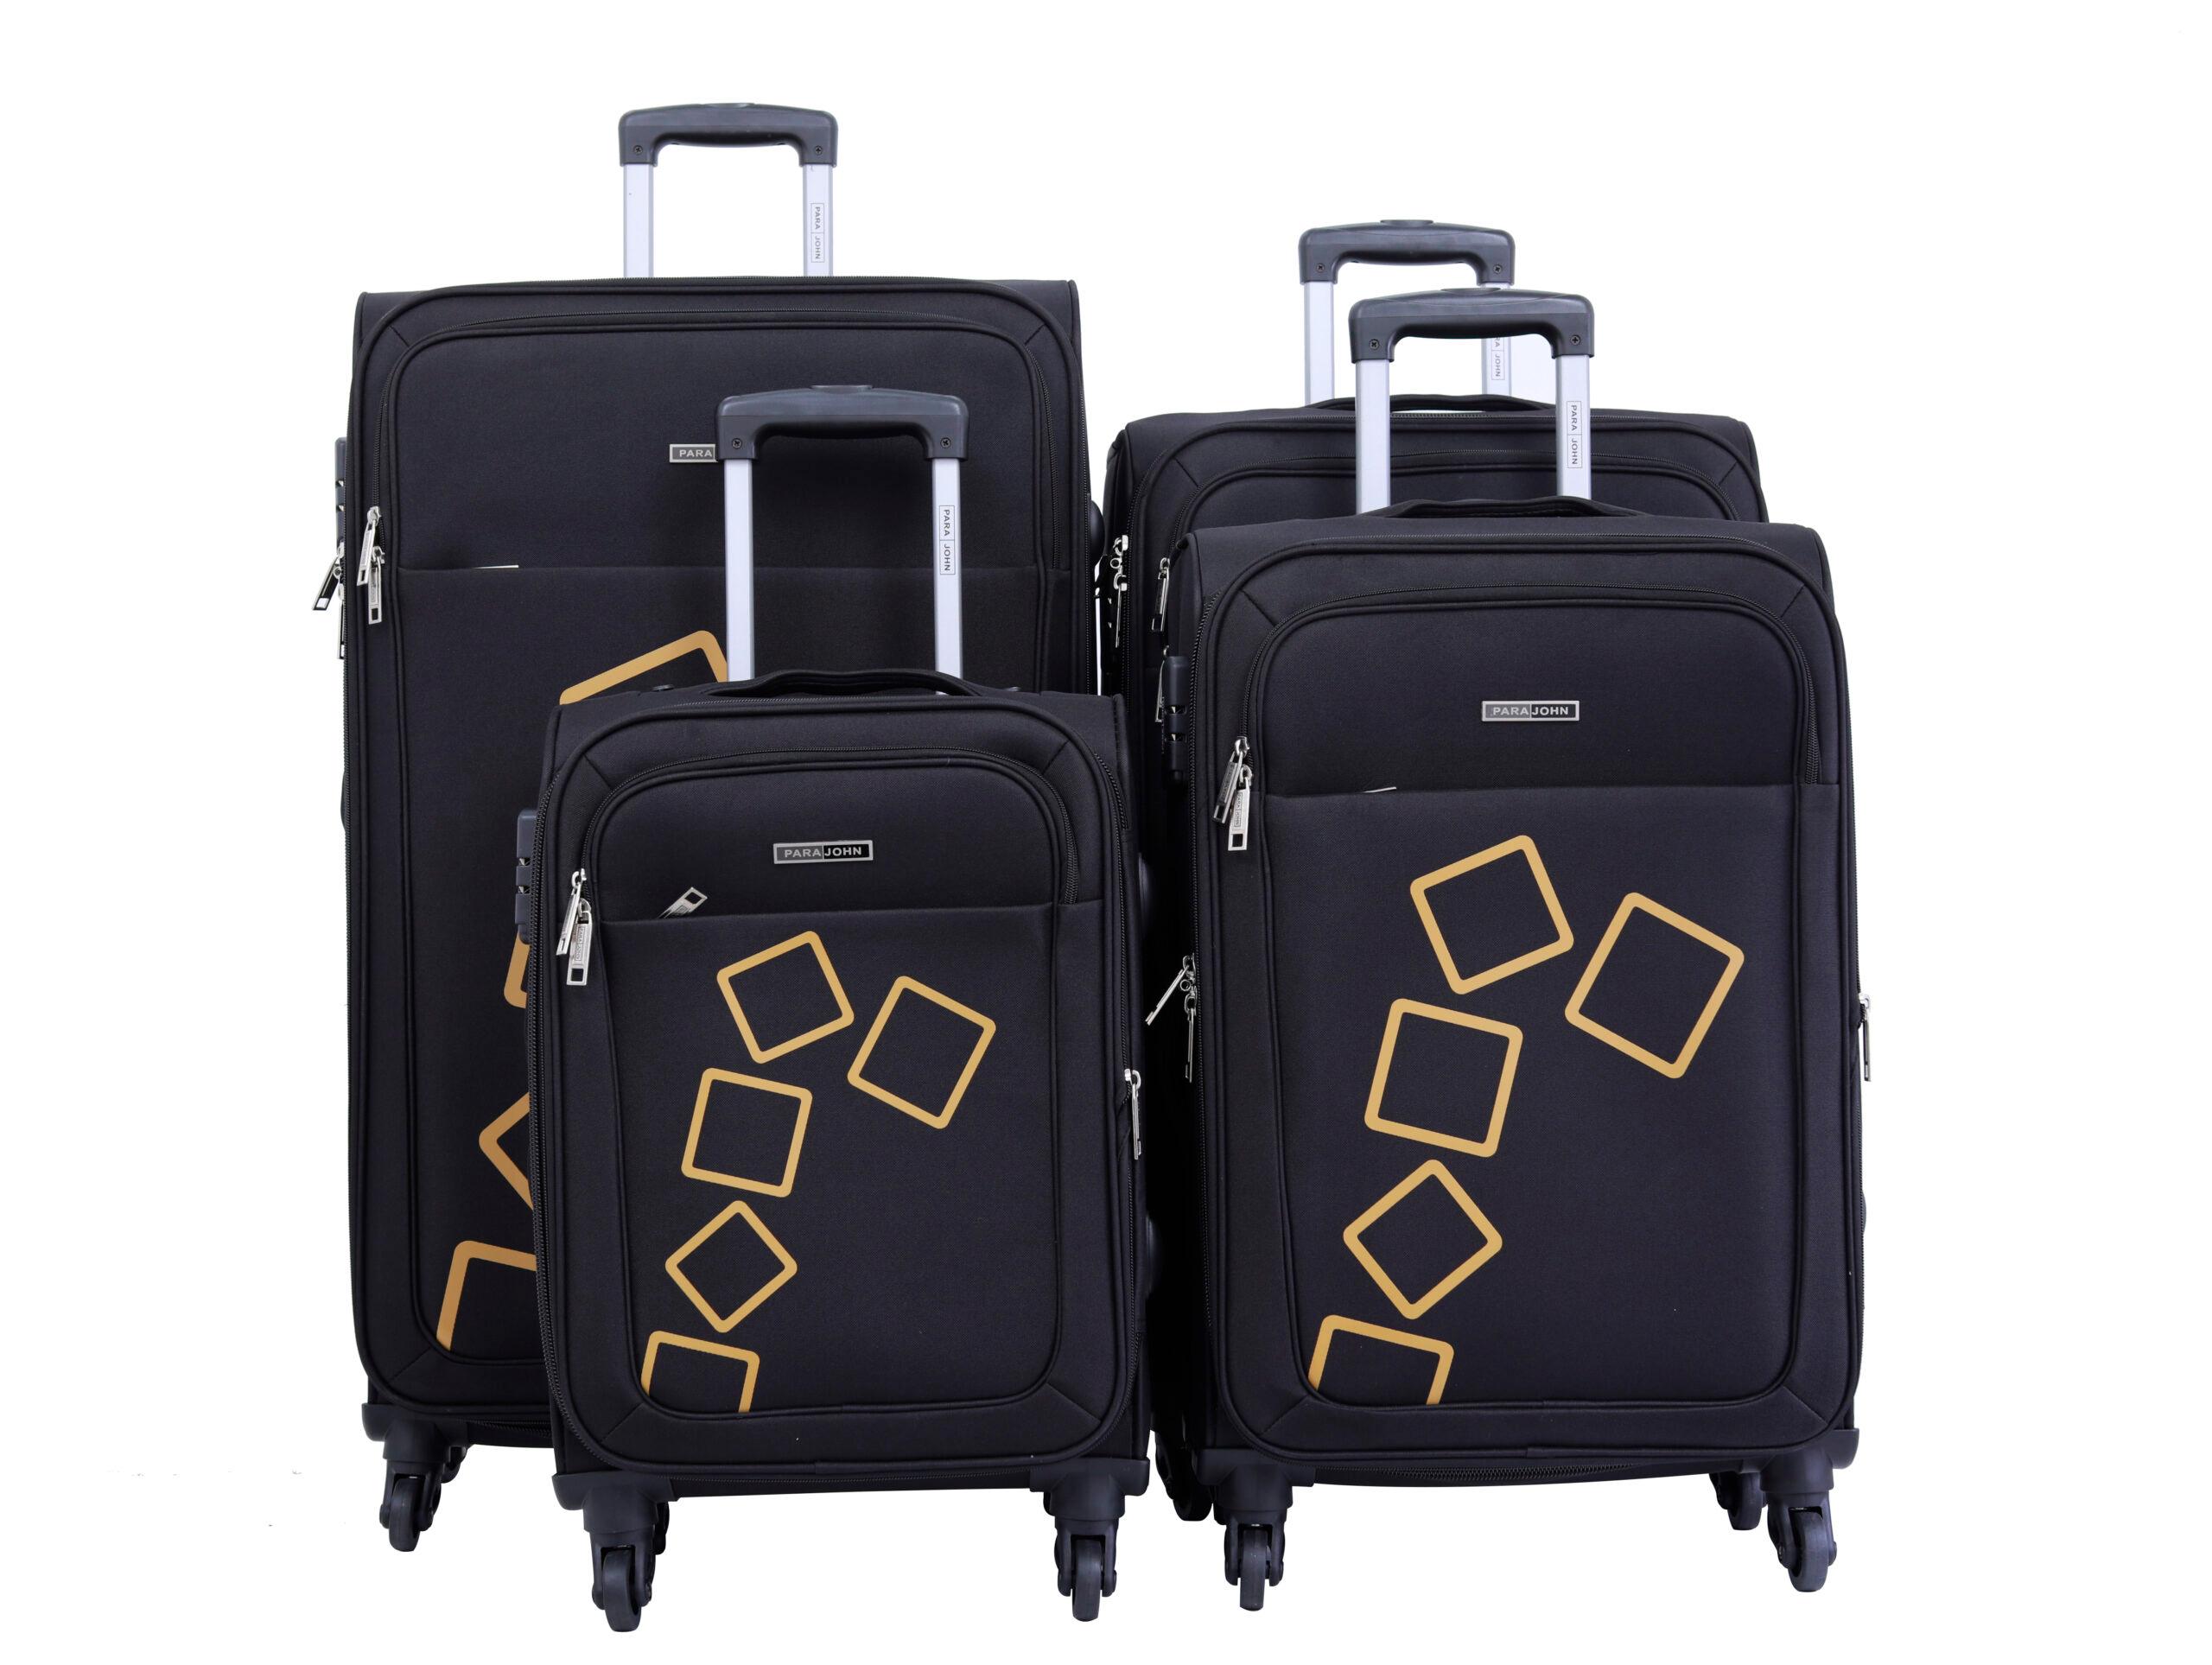 طقم حقائب سفر 4 حقائب نايلون بعجلات دوارة (20 ، 24 ، 28 ، 32) بوصة أسود PARA JOHN - Travel Luggage Suitcase Set of 4 - Trolley Bag (20 ، 24 ، 28 ، 32) inch